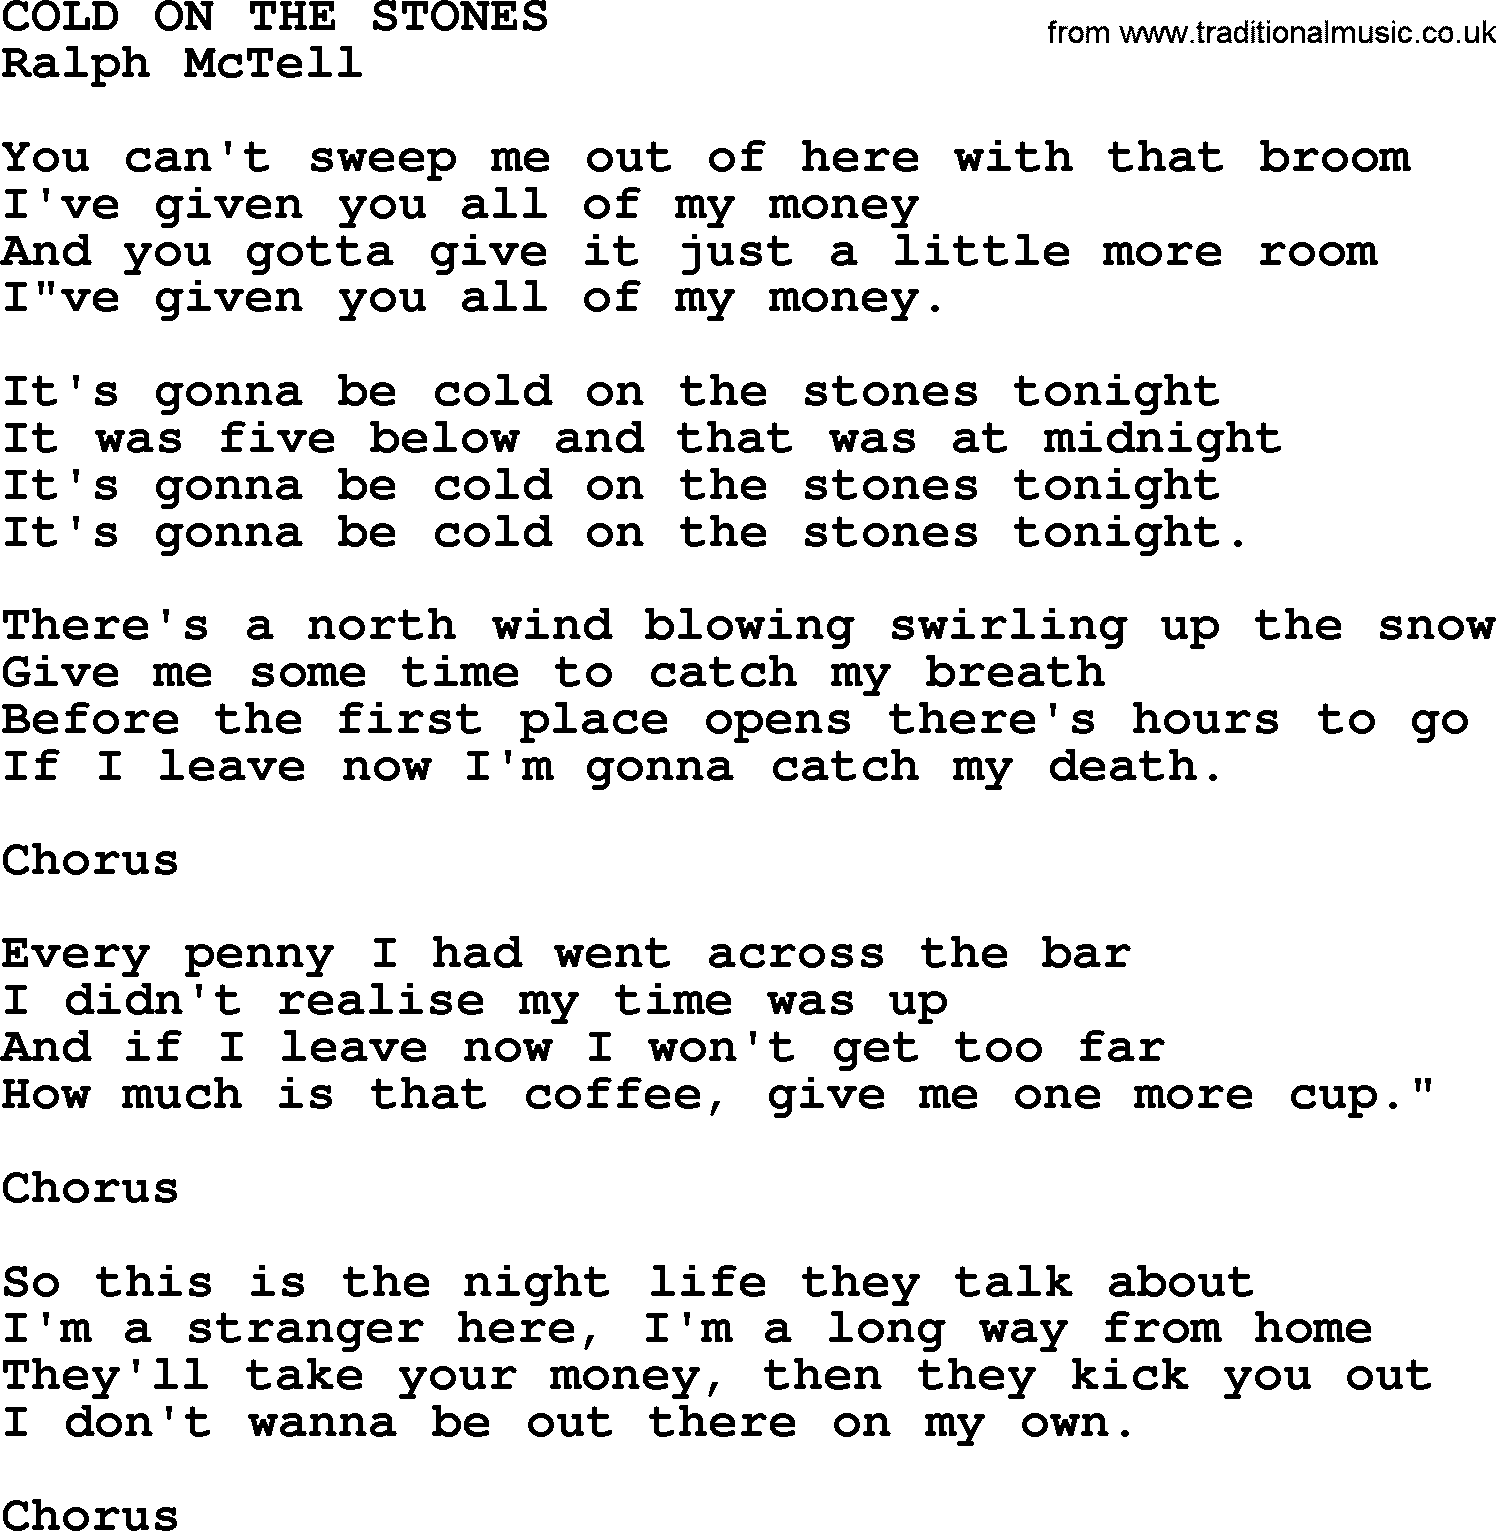 Ralph McTell Song: Cold On The Stones, lyrics